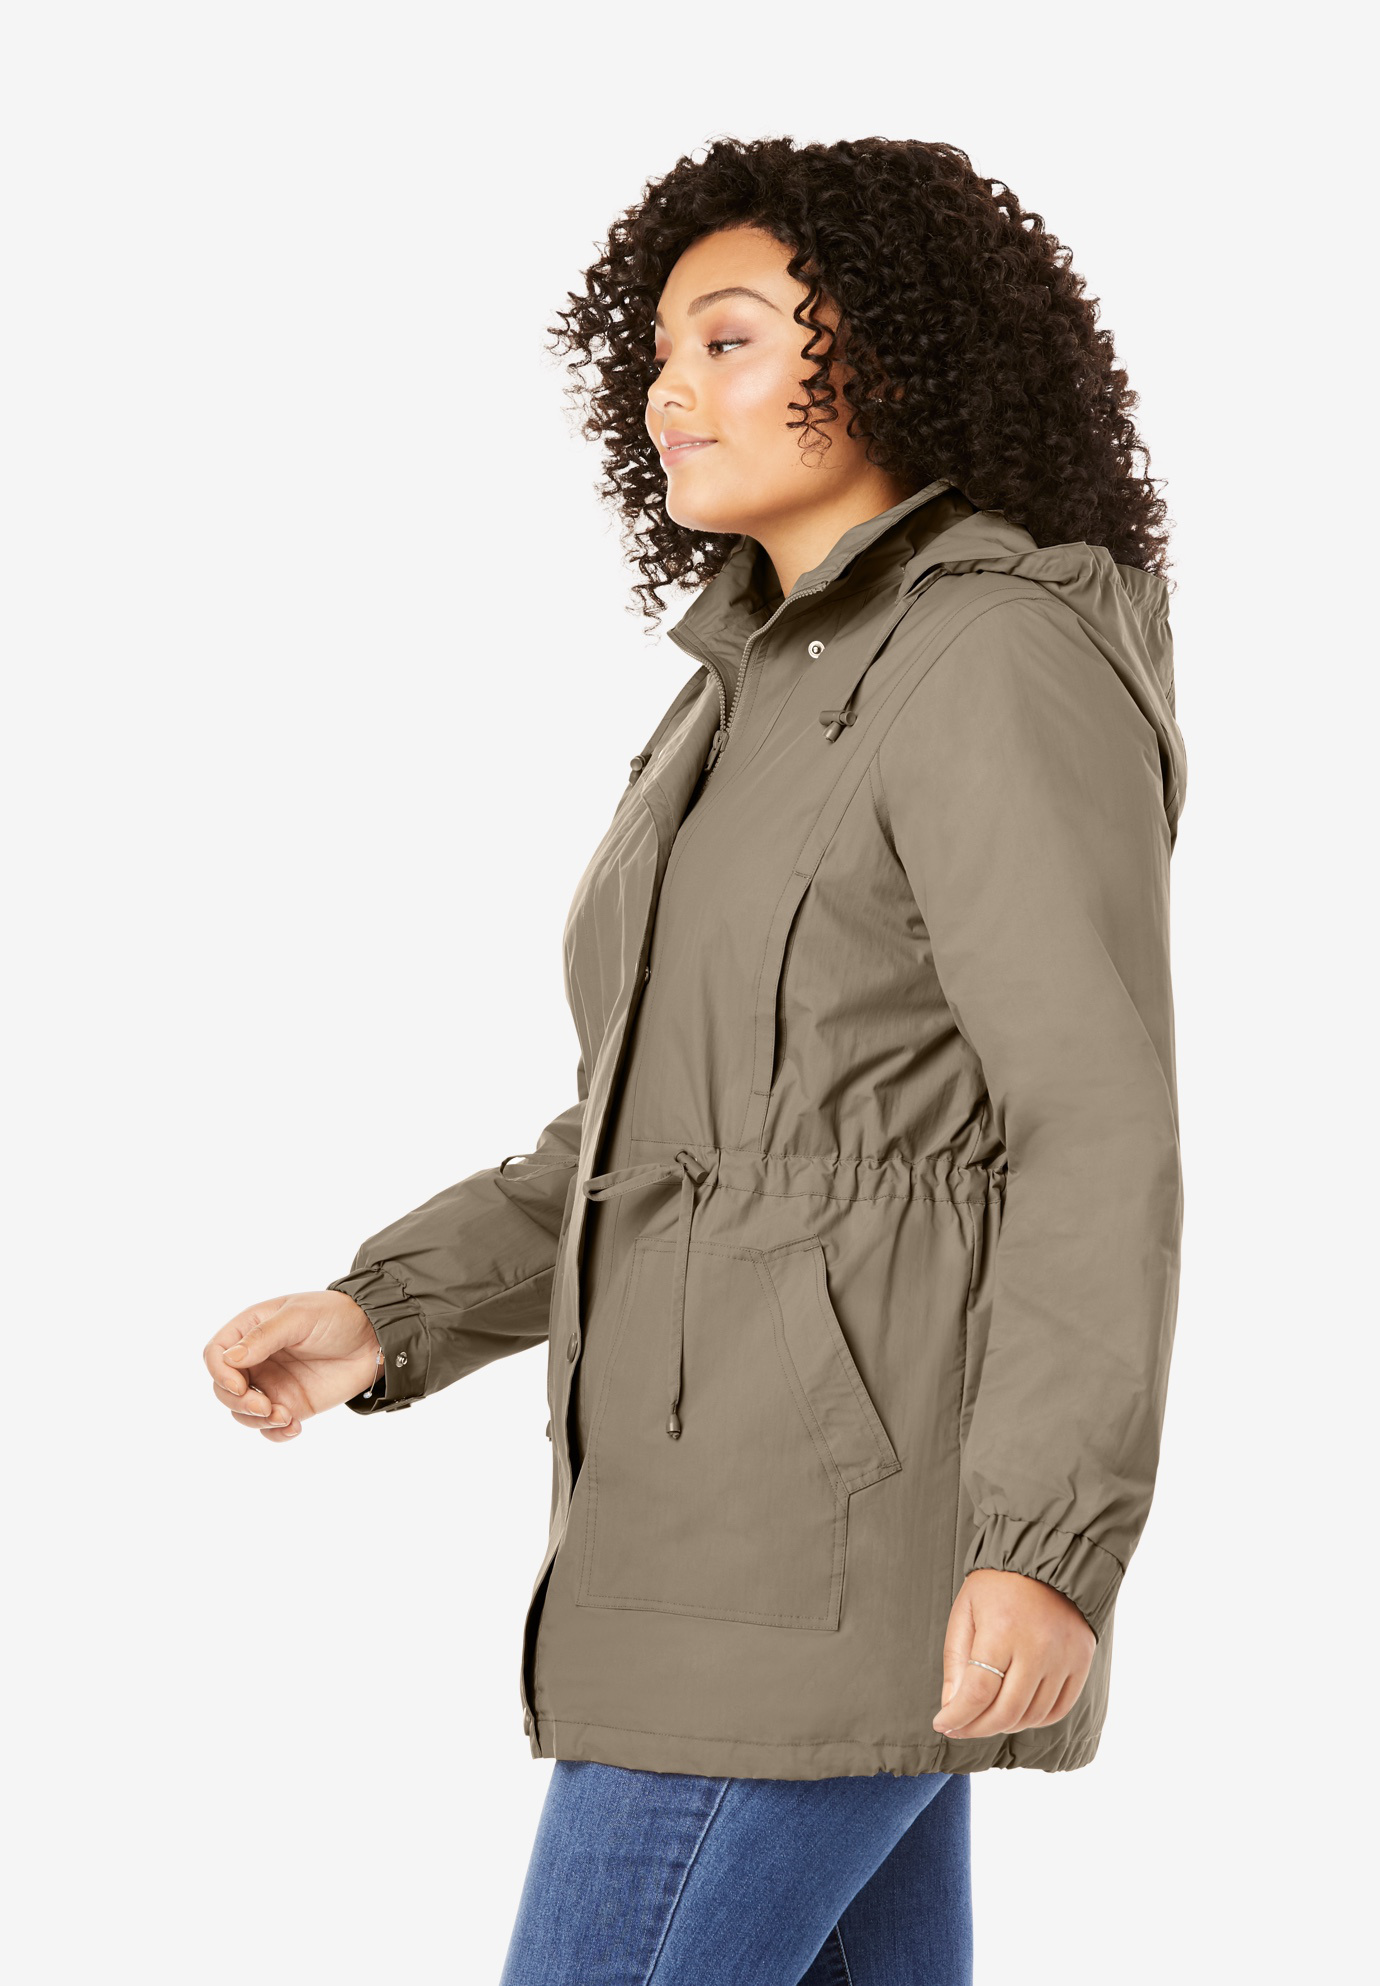 Woman Within Women's Plus Size Fleece-Lined Taslon Anorak Rain Jacket - image 5 of 6